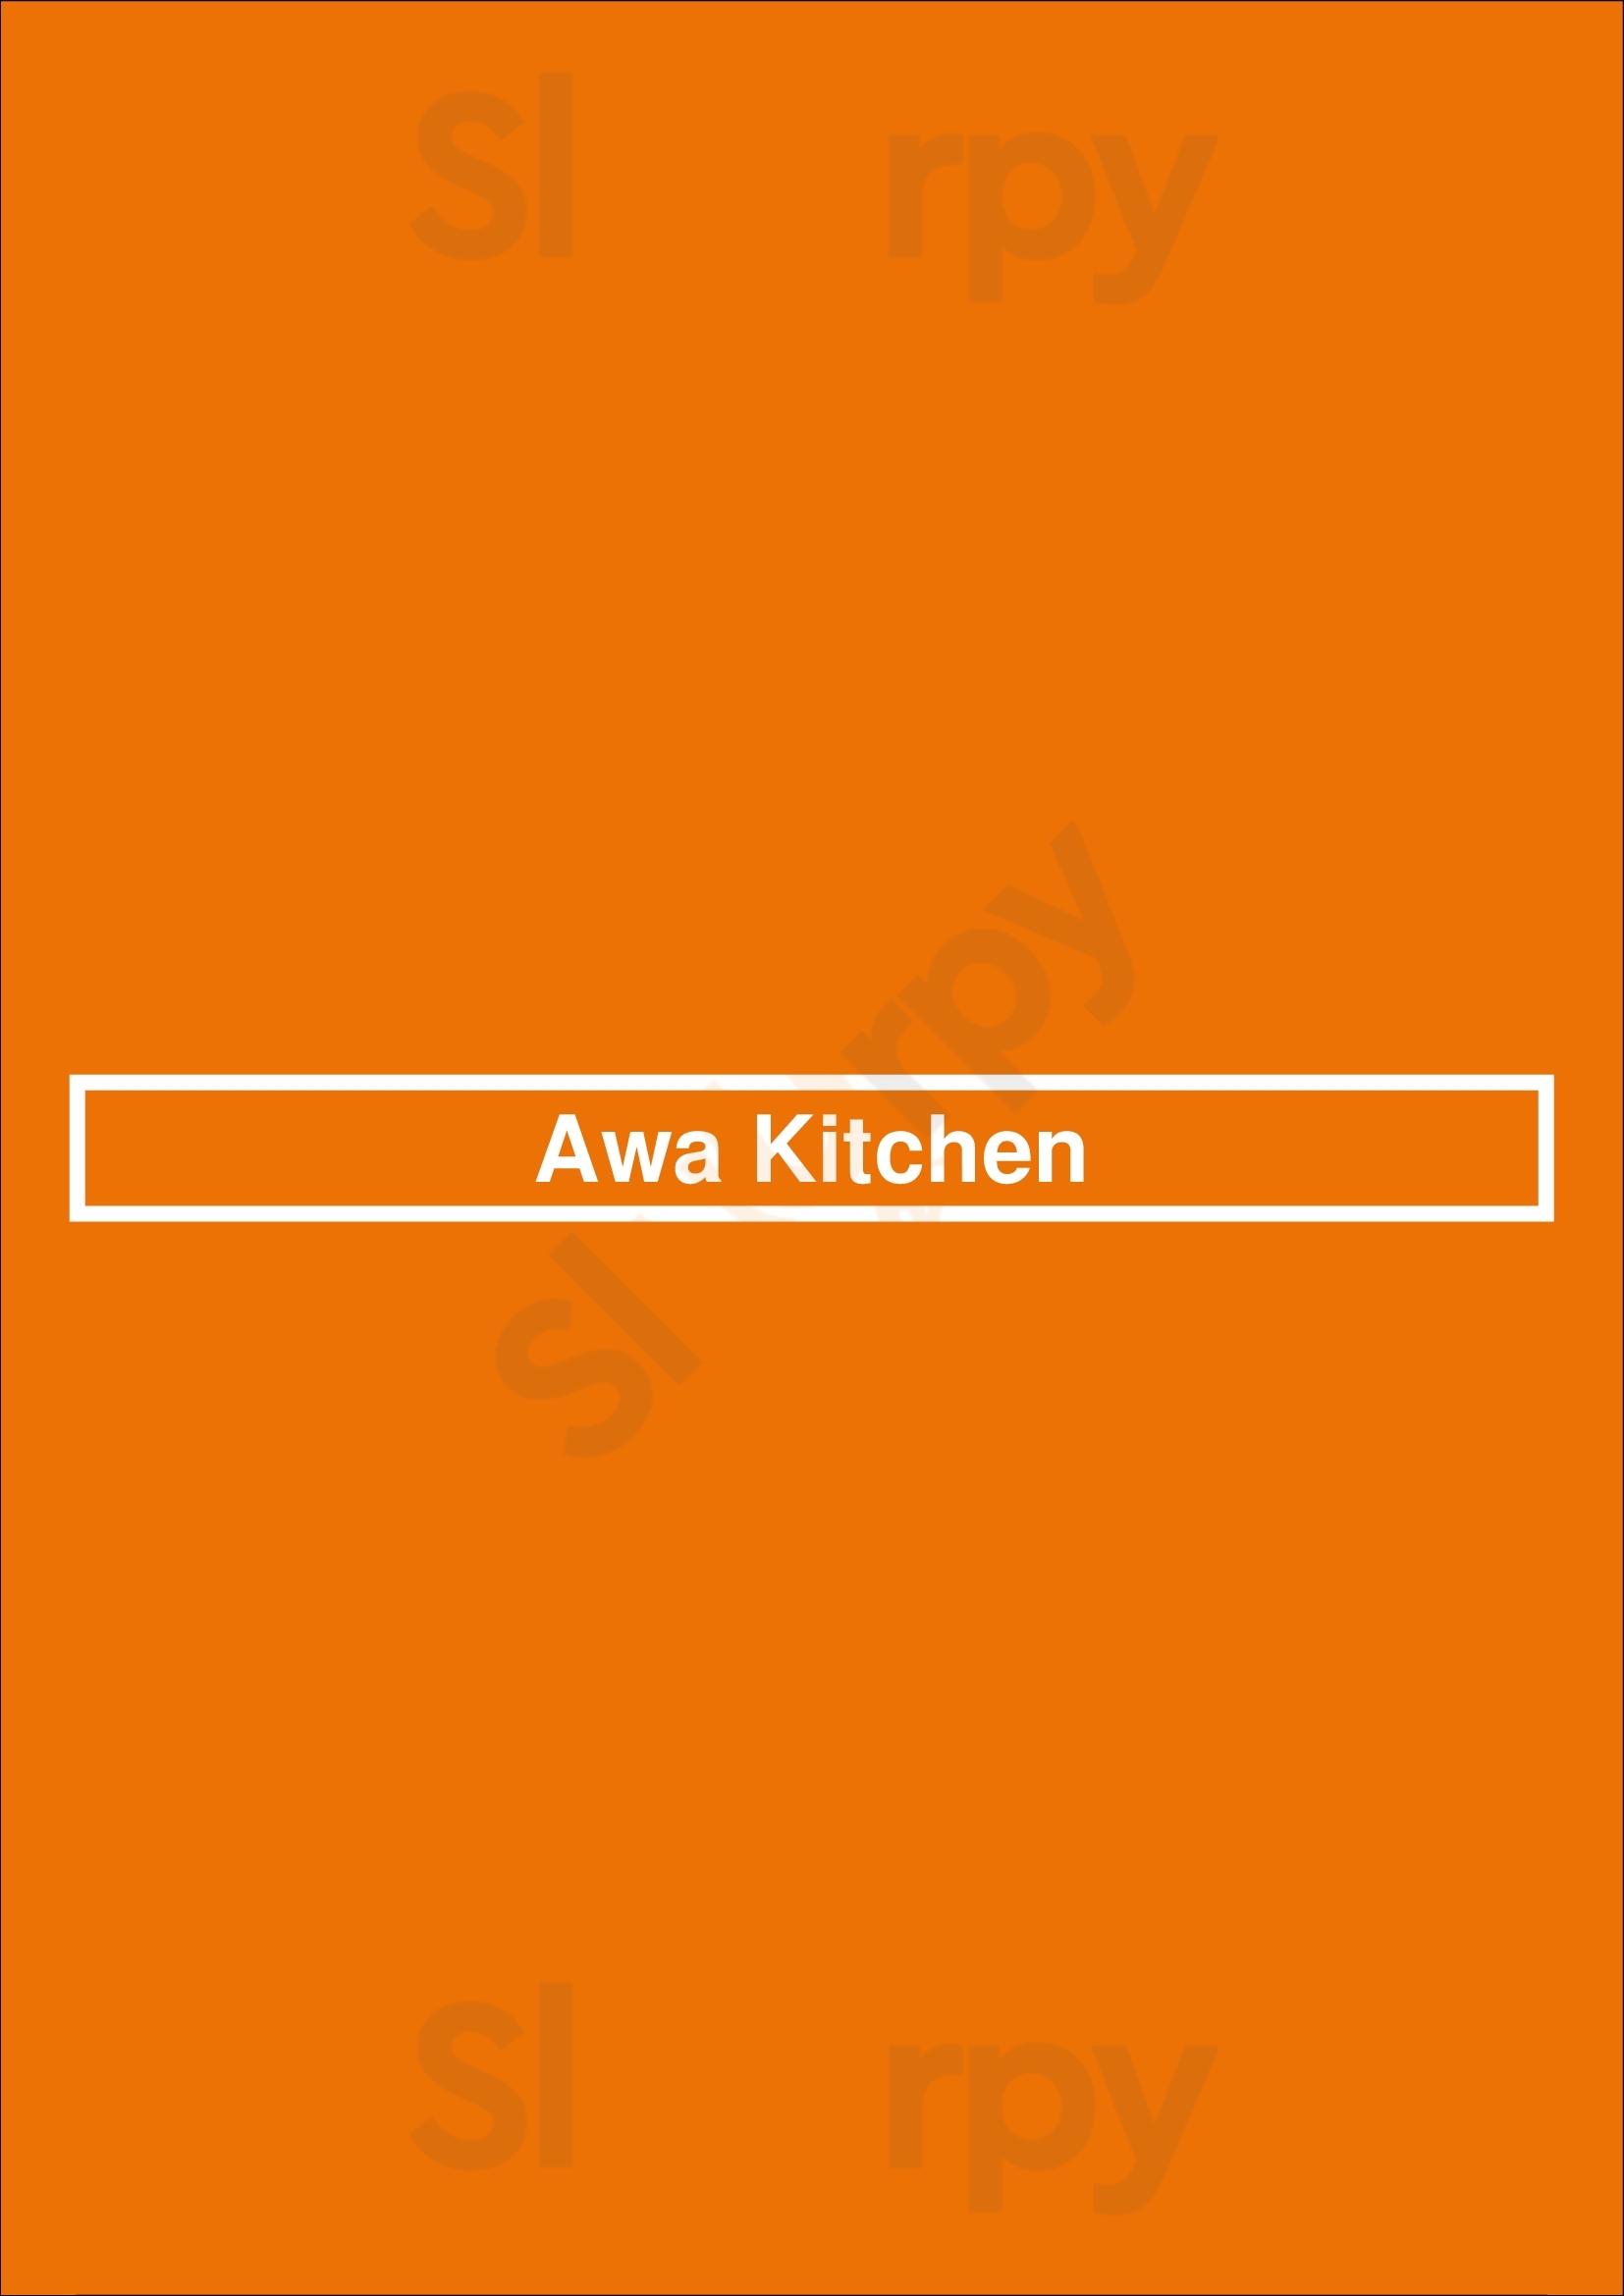 Awa Kitchen London Menu - 1